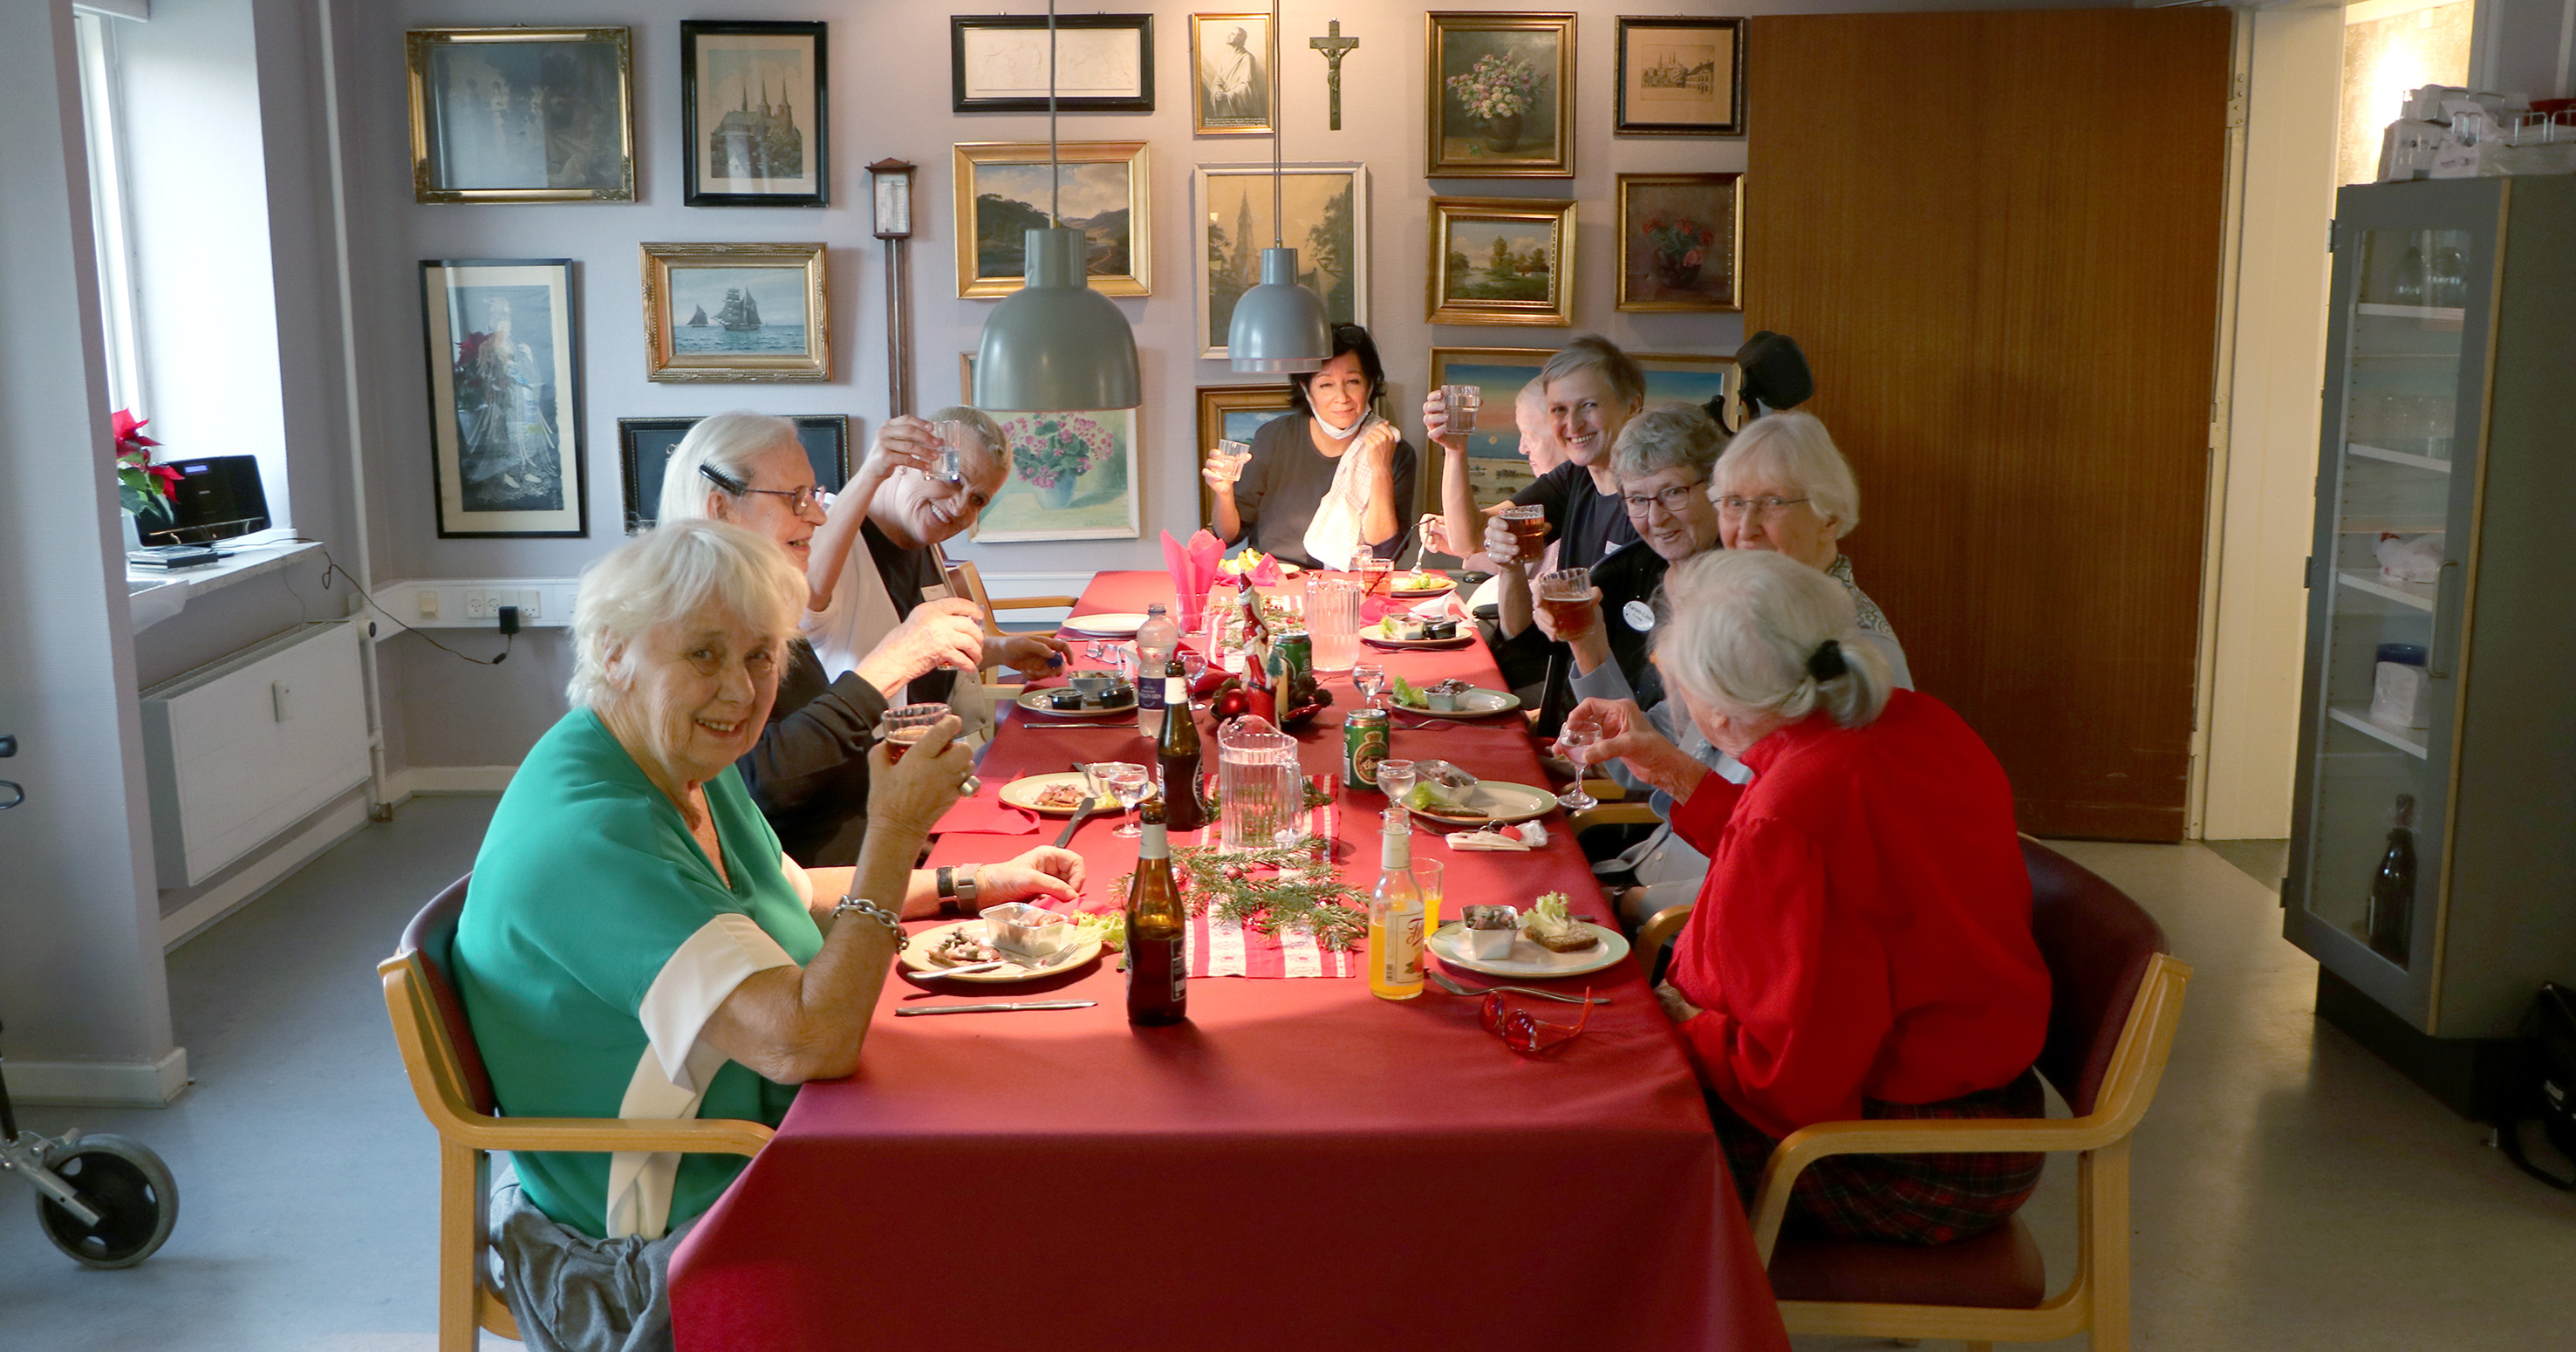 Billedet viser personer som spiser julefrokost rundt om en dækket bord.